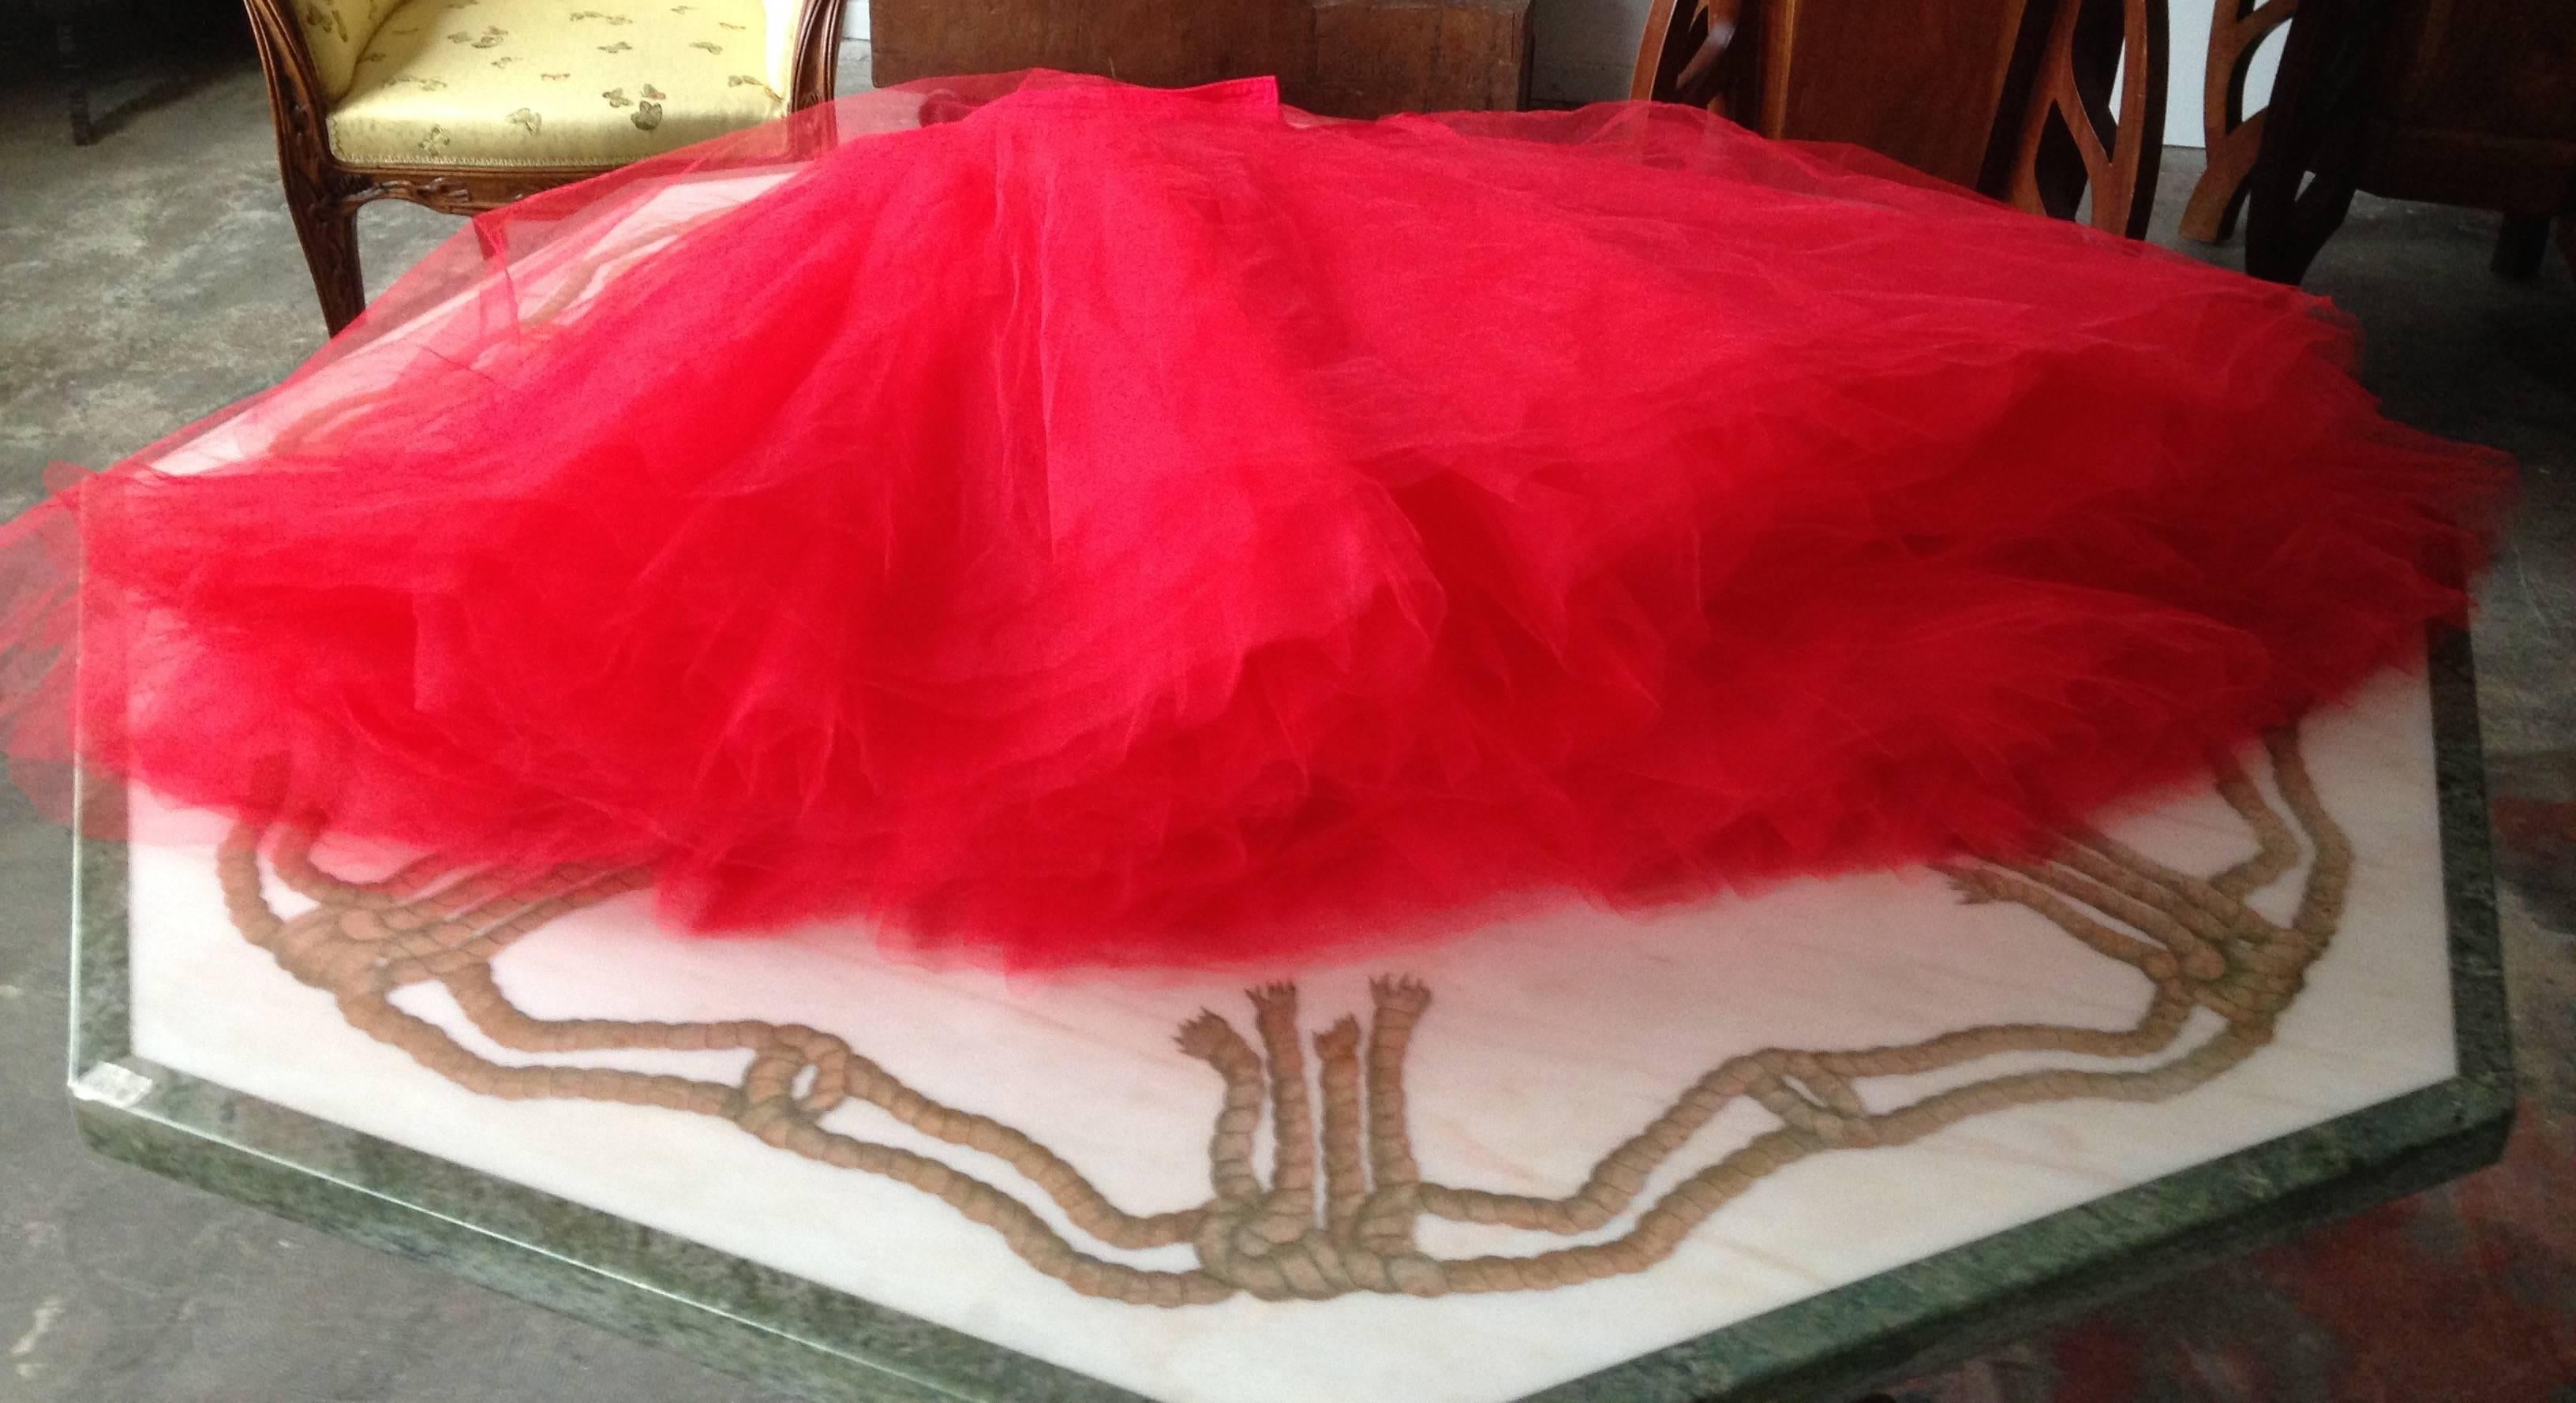 1991 Comme des Garcons Red Velvet Tunic Dress with Tulle Underskirt 5